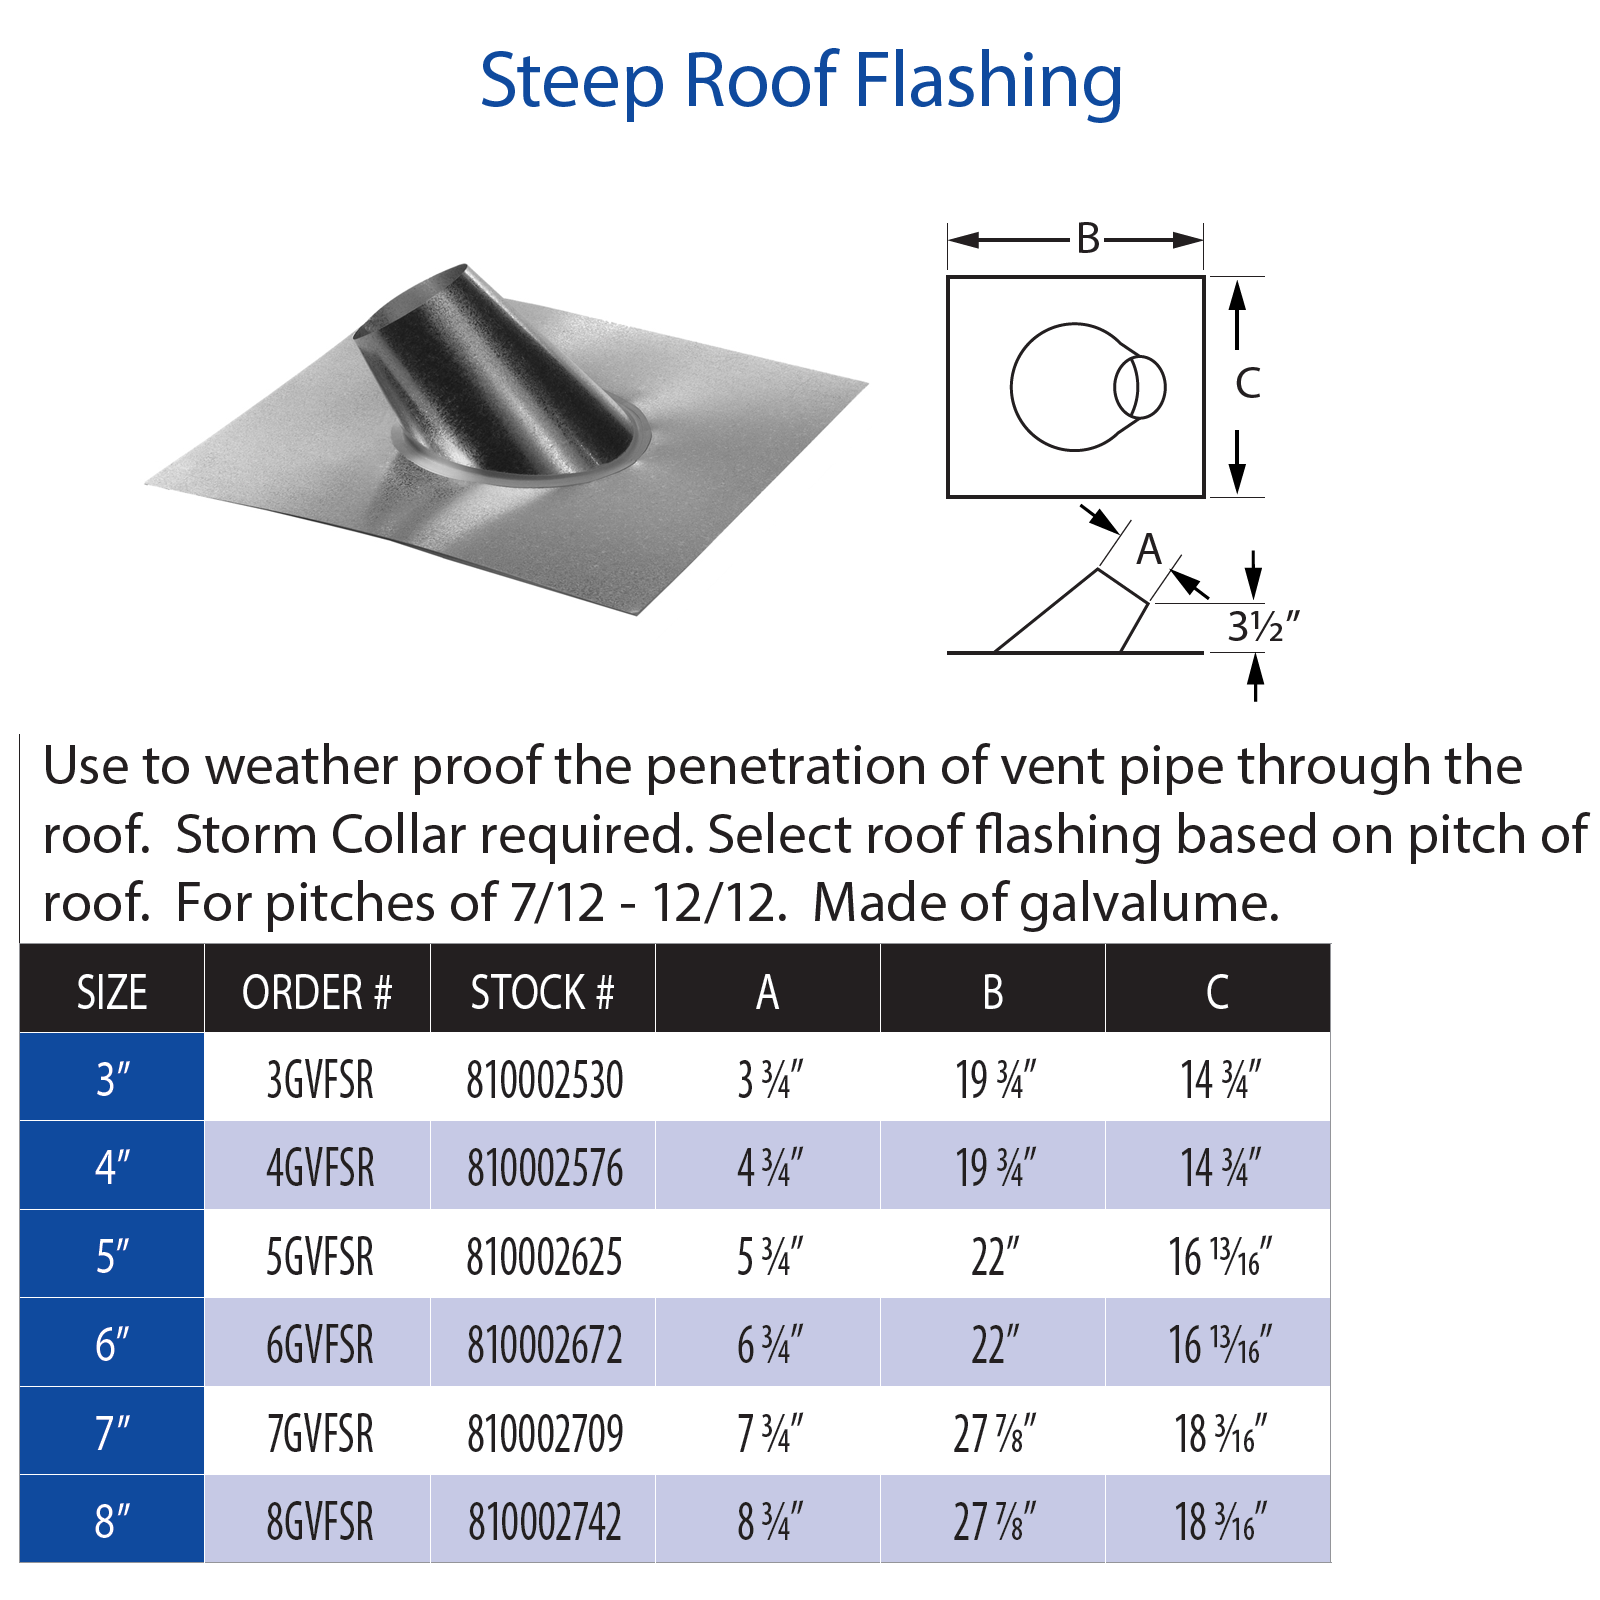 DuraVent Type B Steep Roof Flashing | 3GVFSR